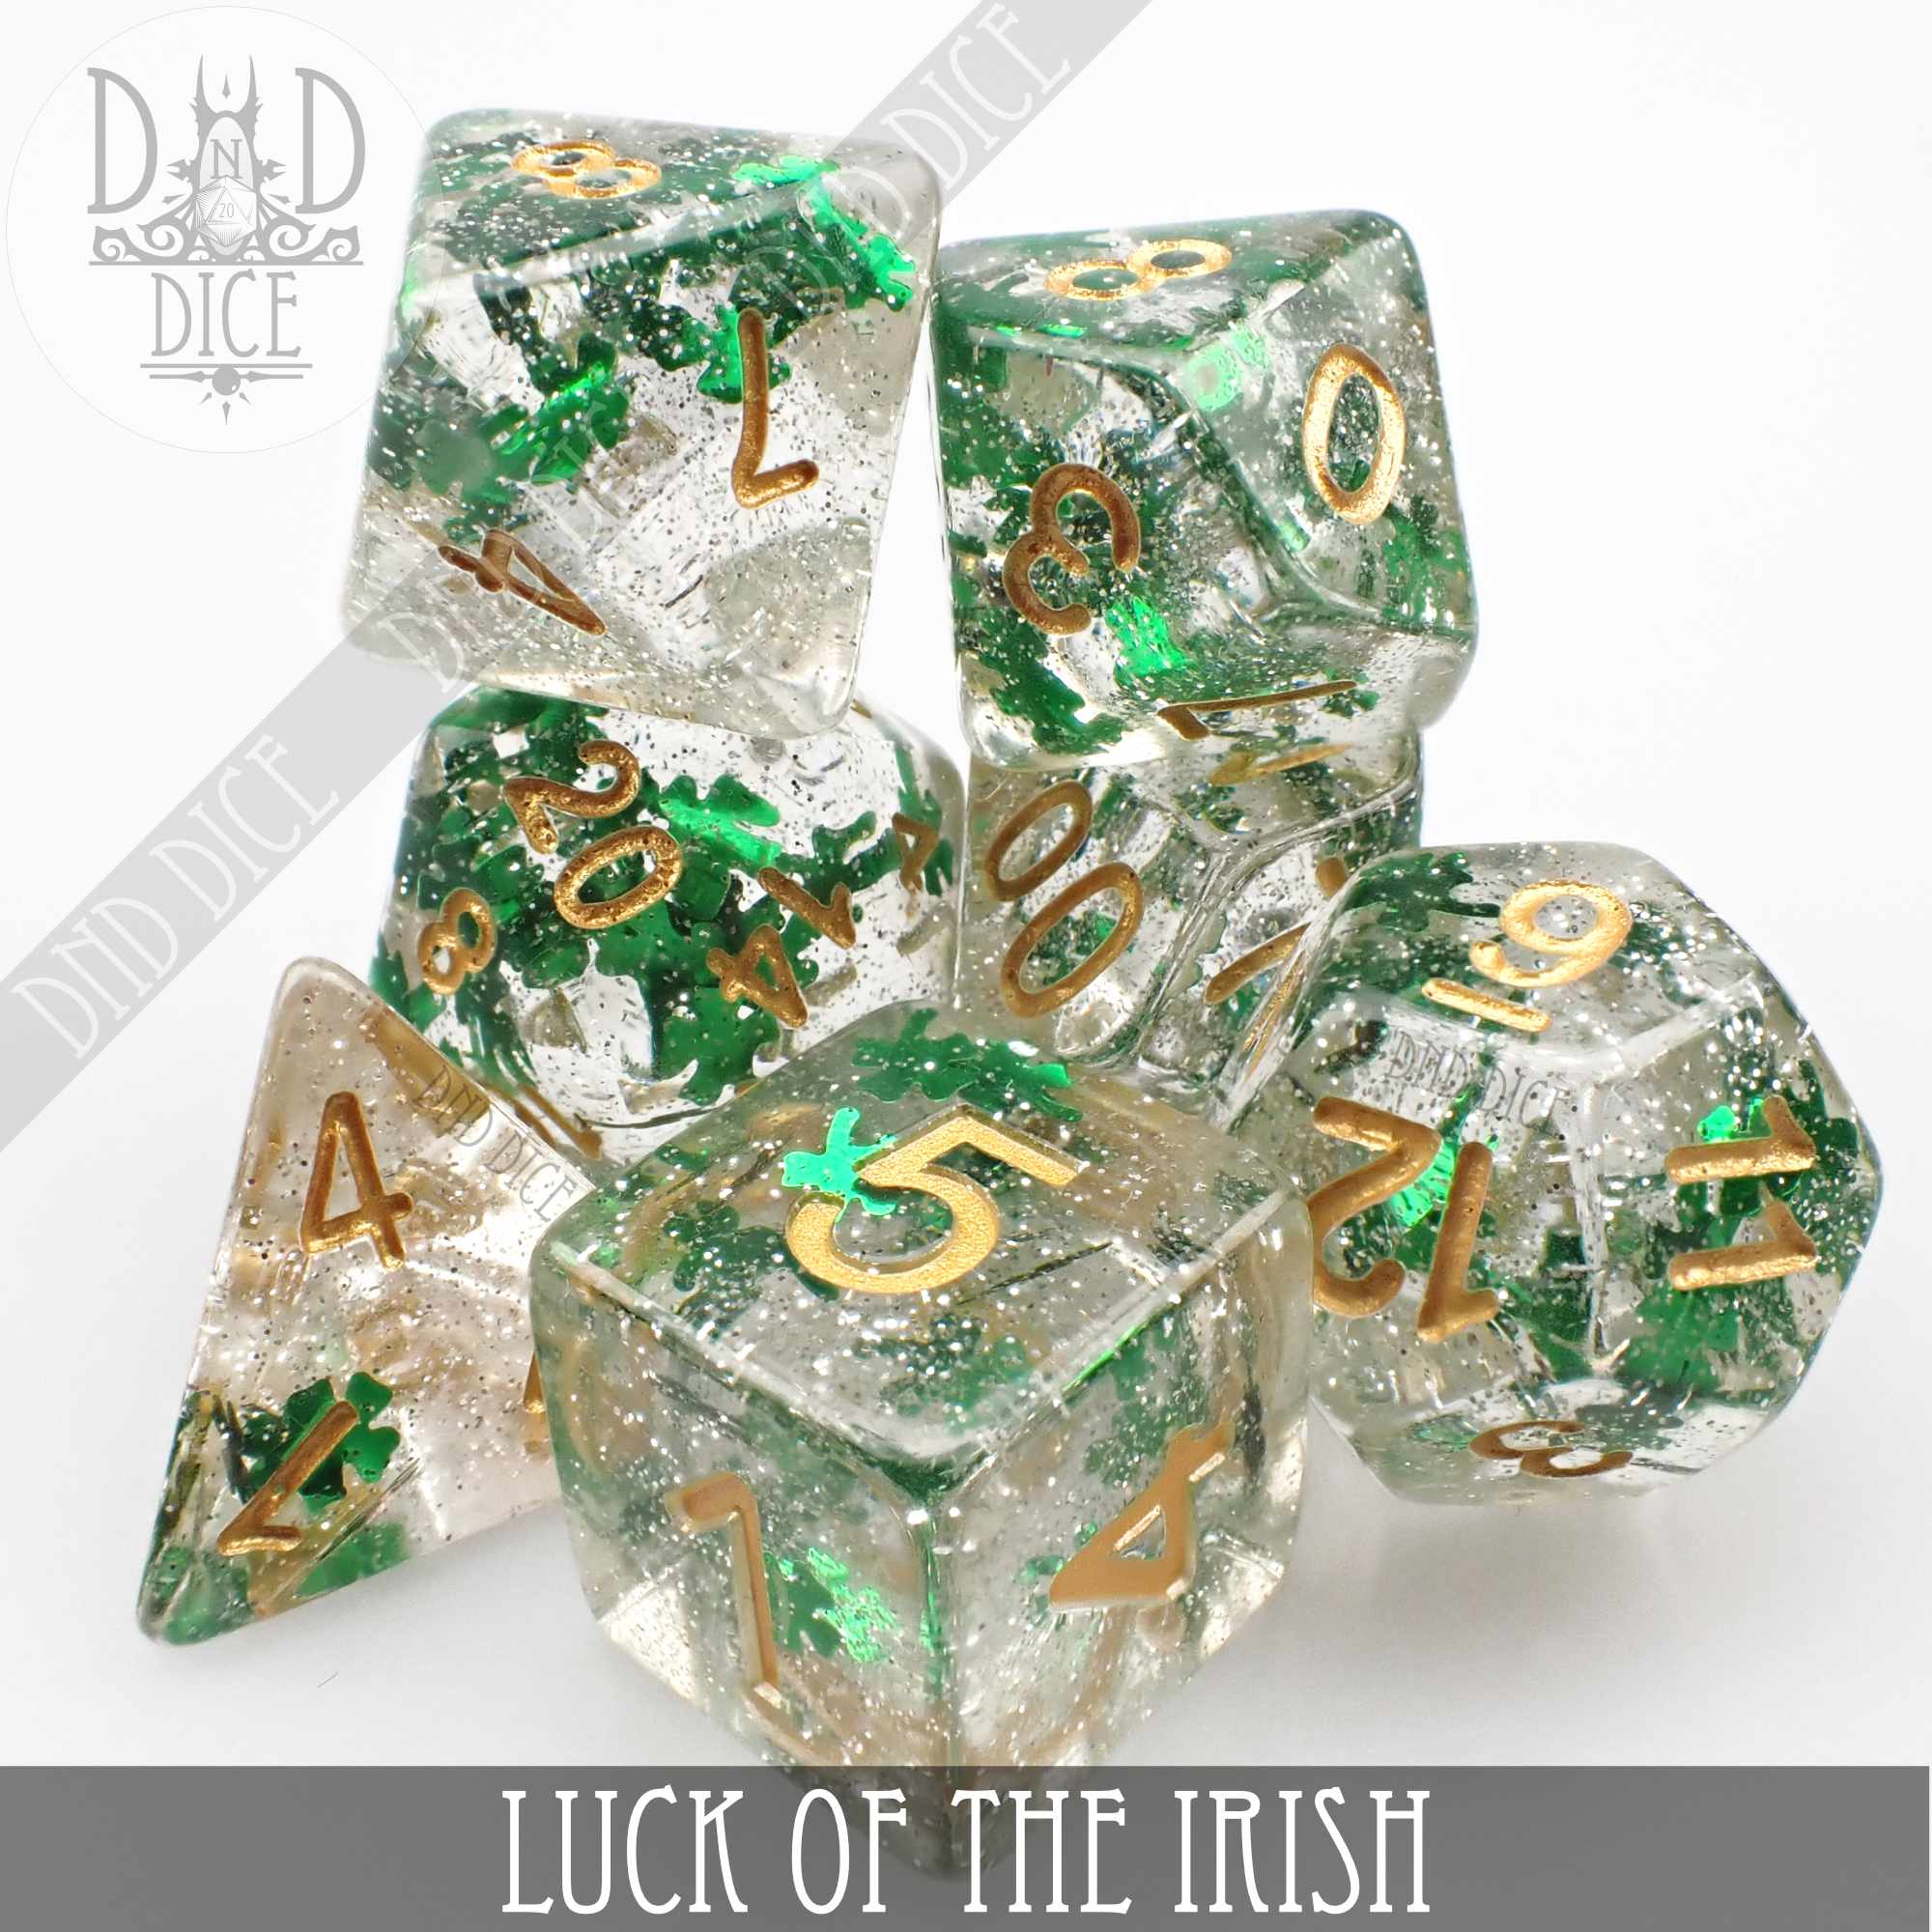 Luck of the Irish Dice Set